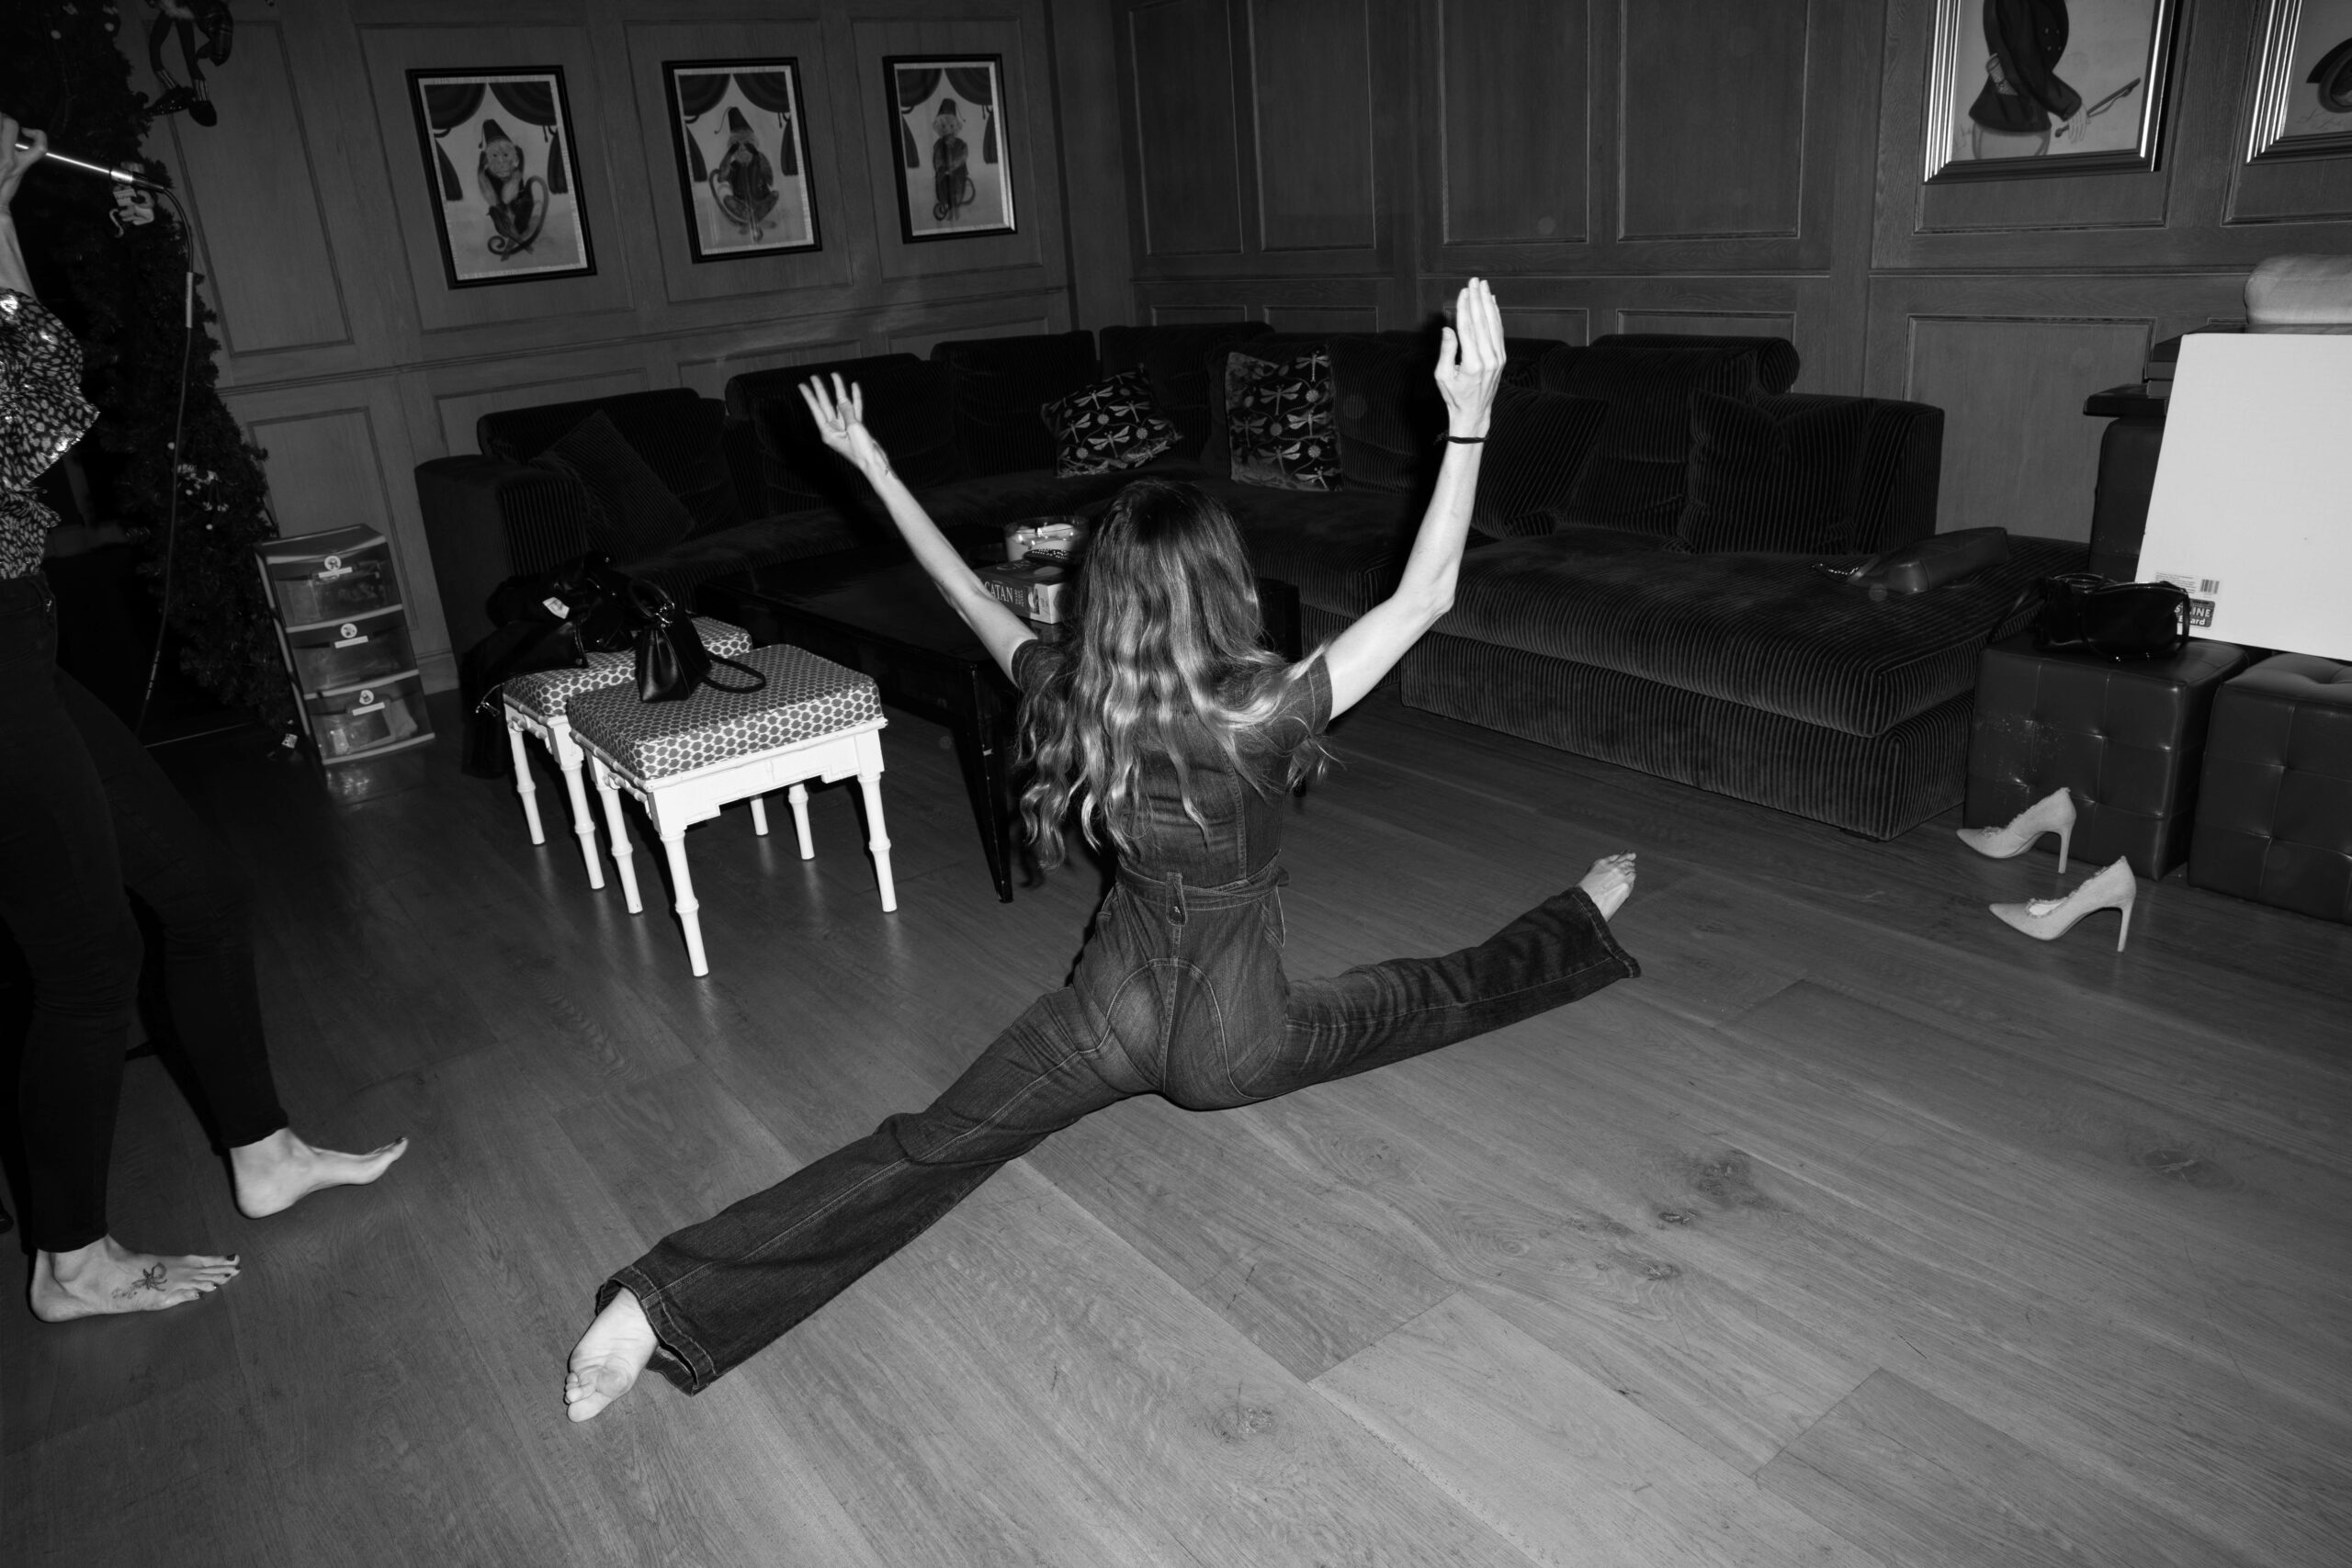 Sarah Howard doing the splits